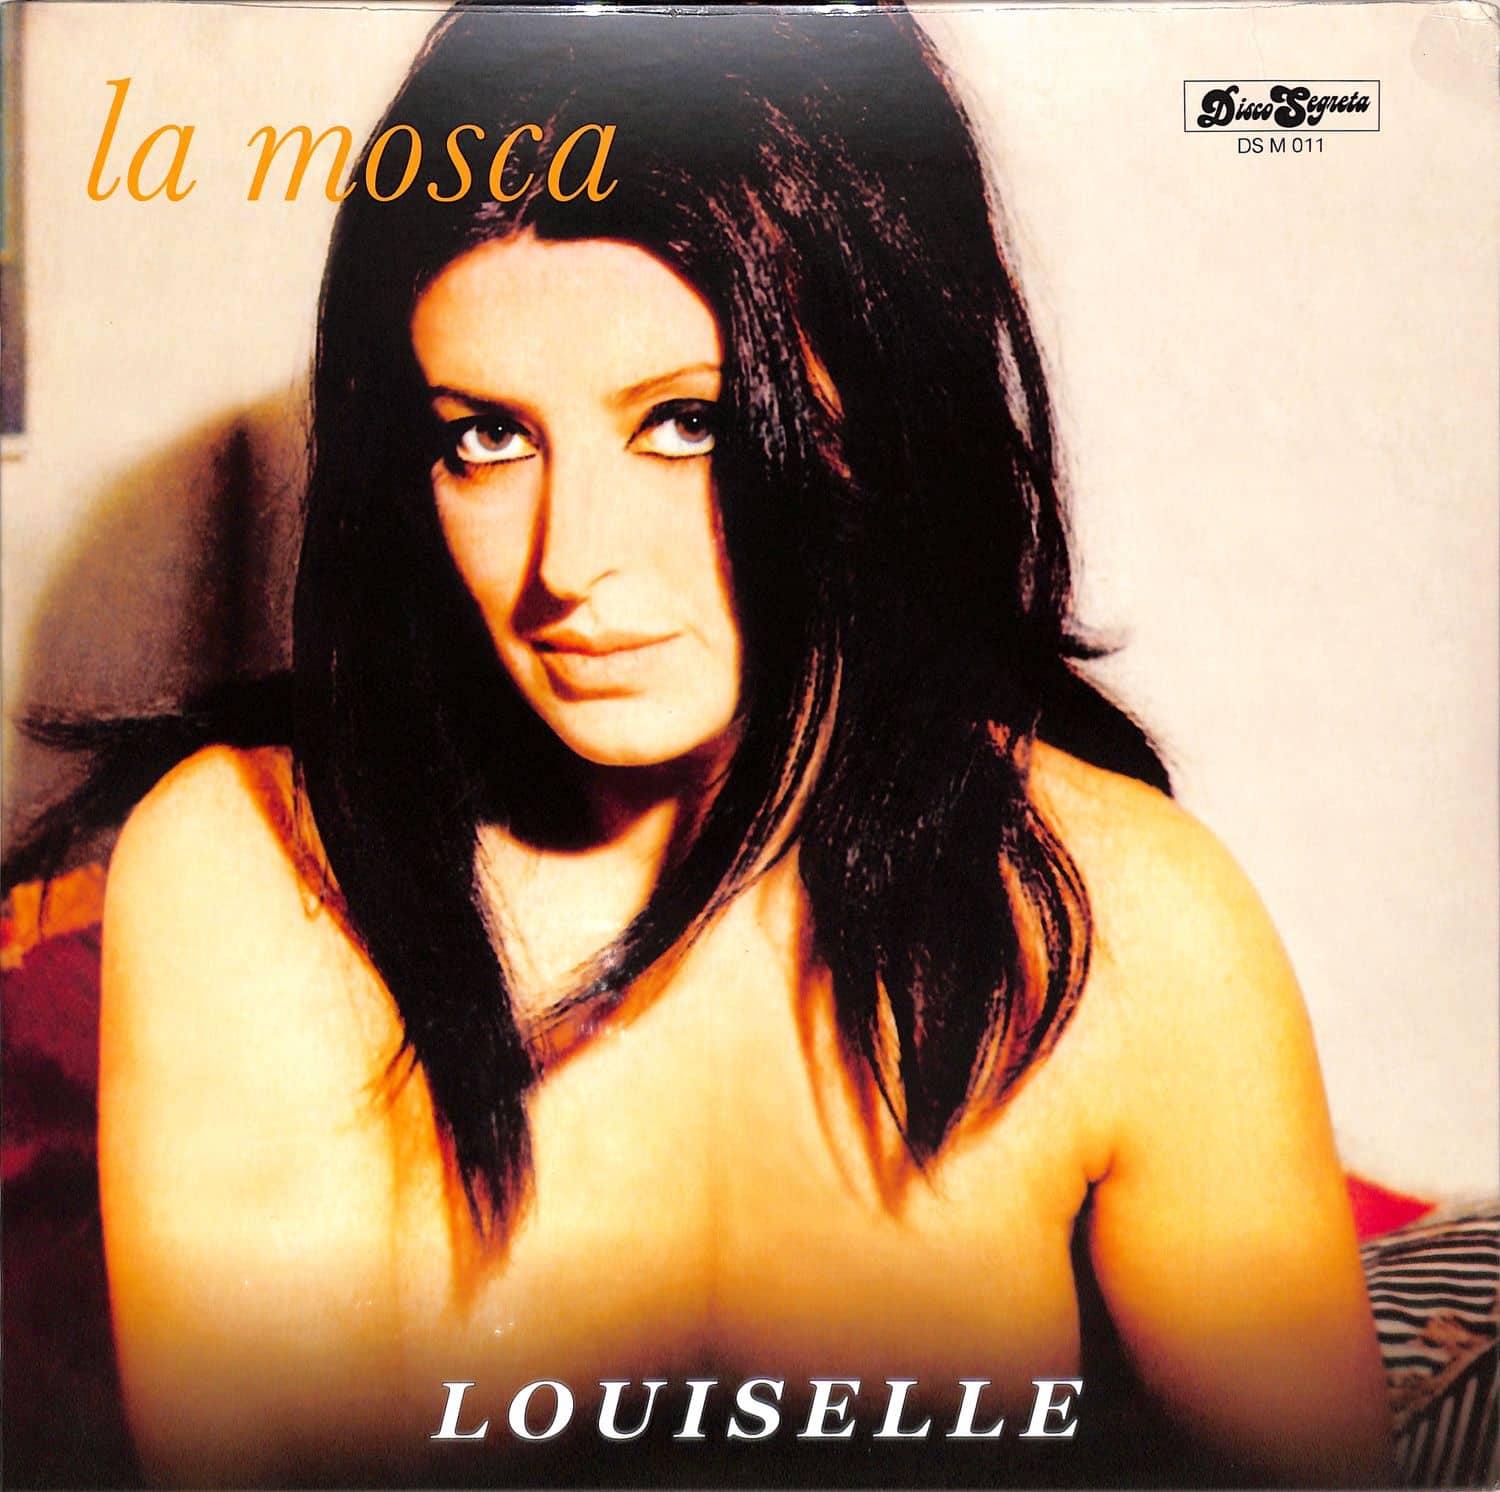 Louiselle - LA MOSCA